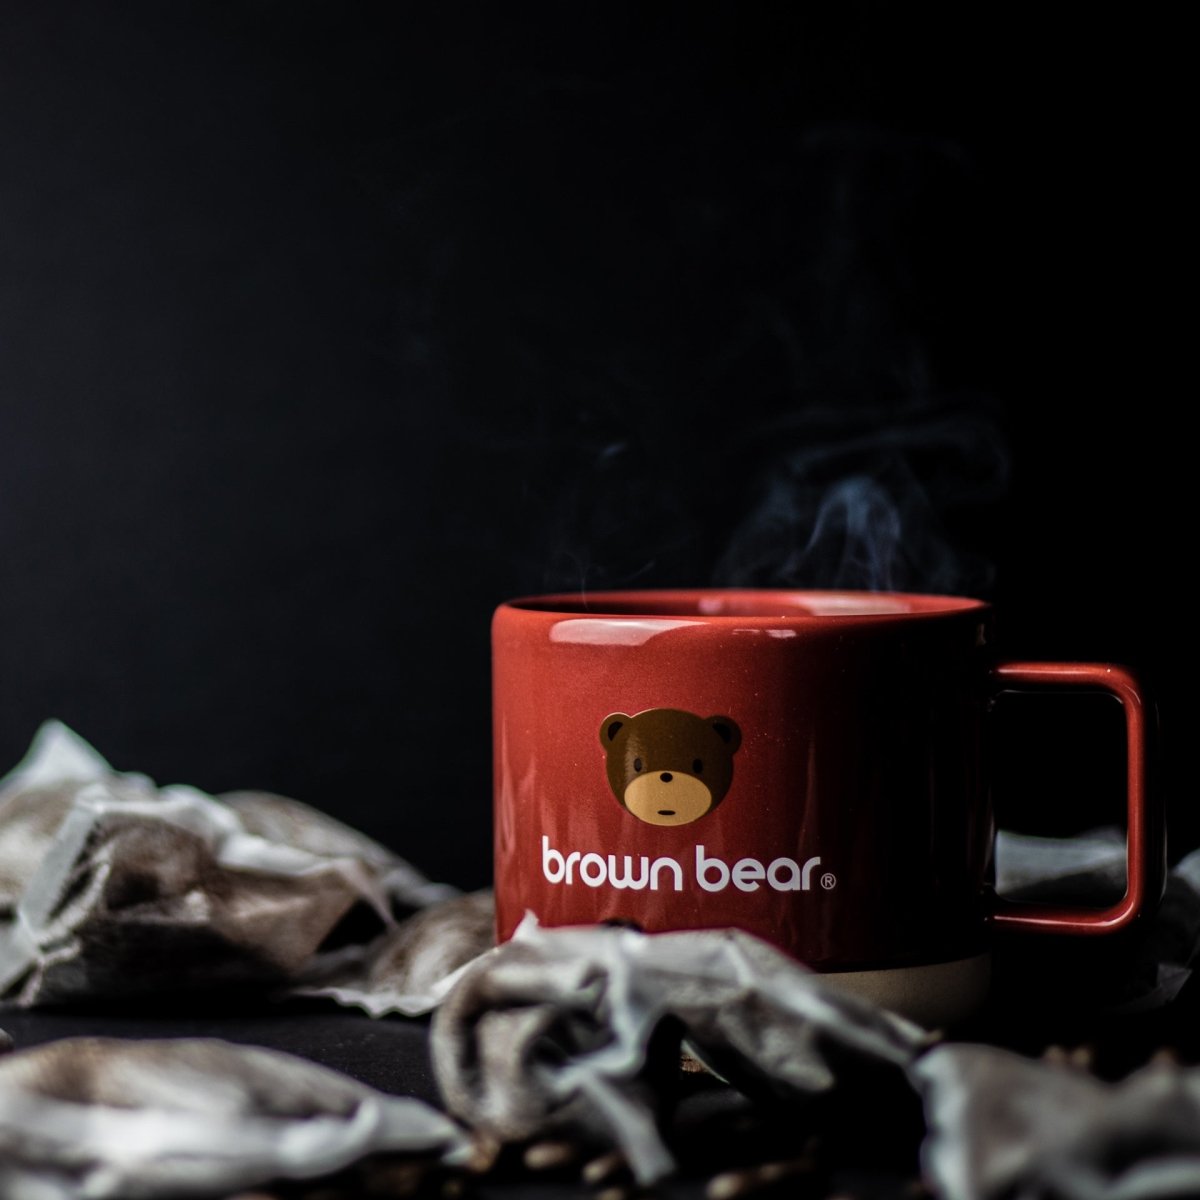 Premium Travel Mug from Black-Blum with Bear Brown engraving a